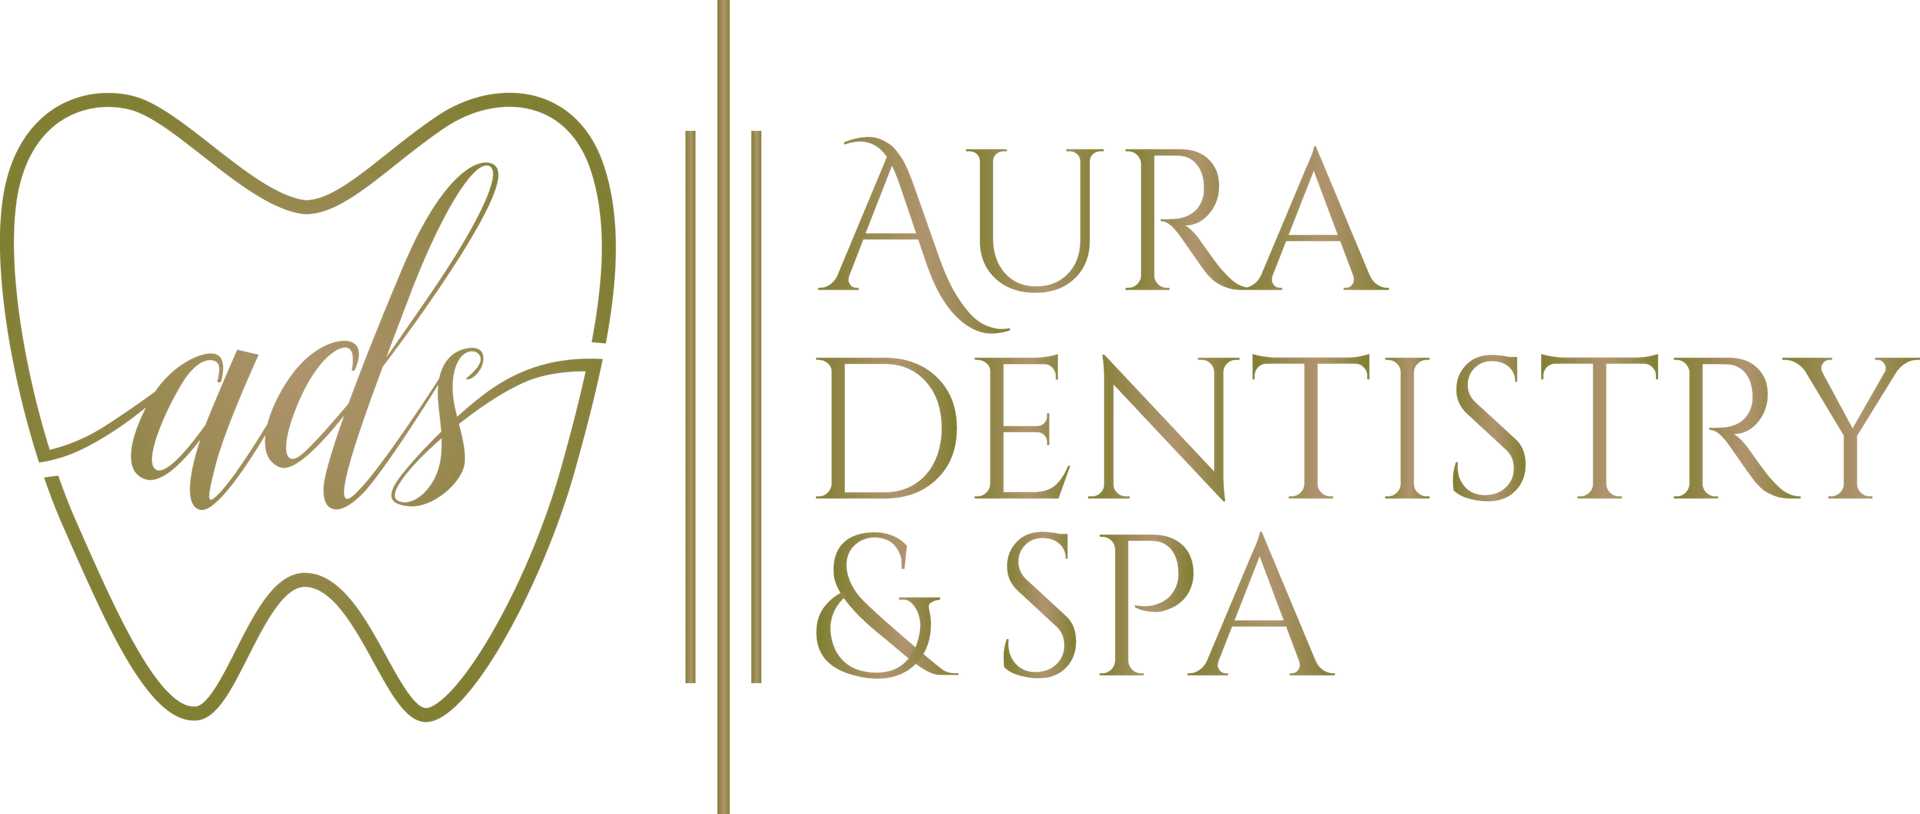 Aura Dentistry & Spa Logo | Best Renton, Washington Dentist